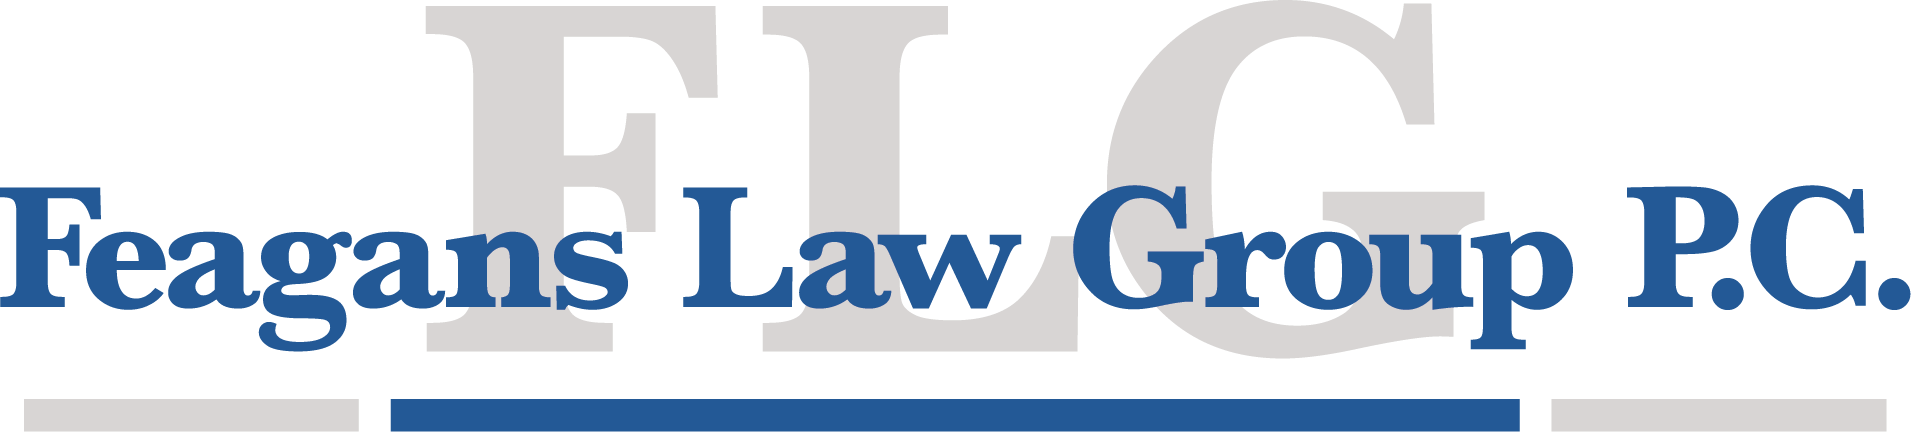 Feagans Law Group P.C.